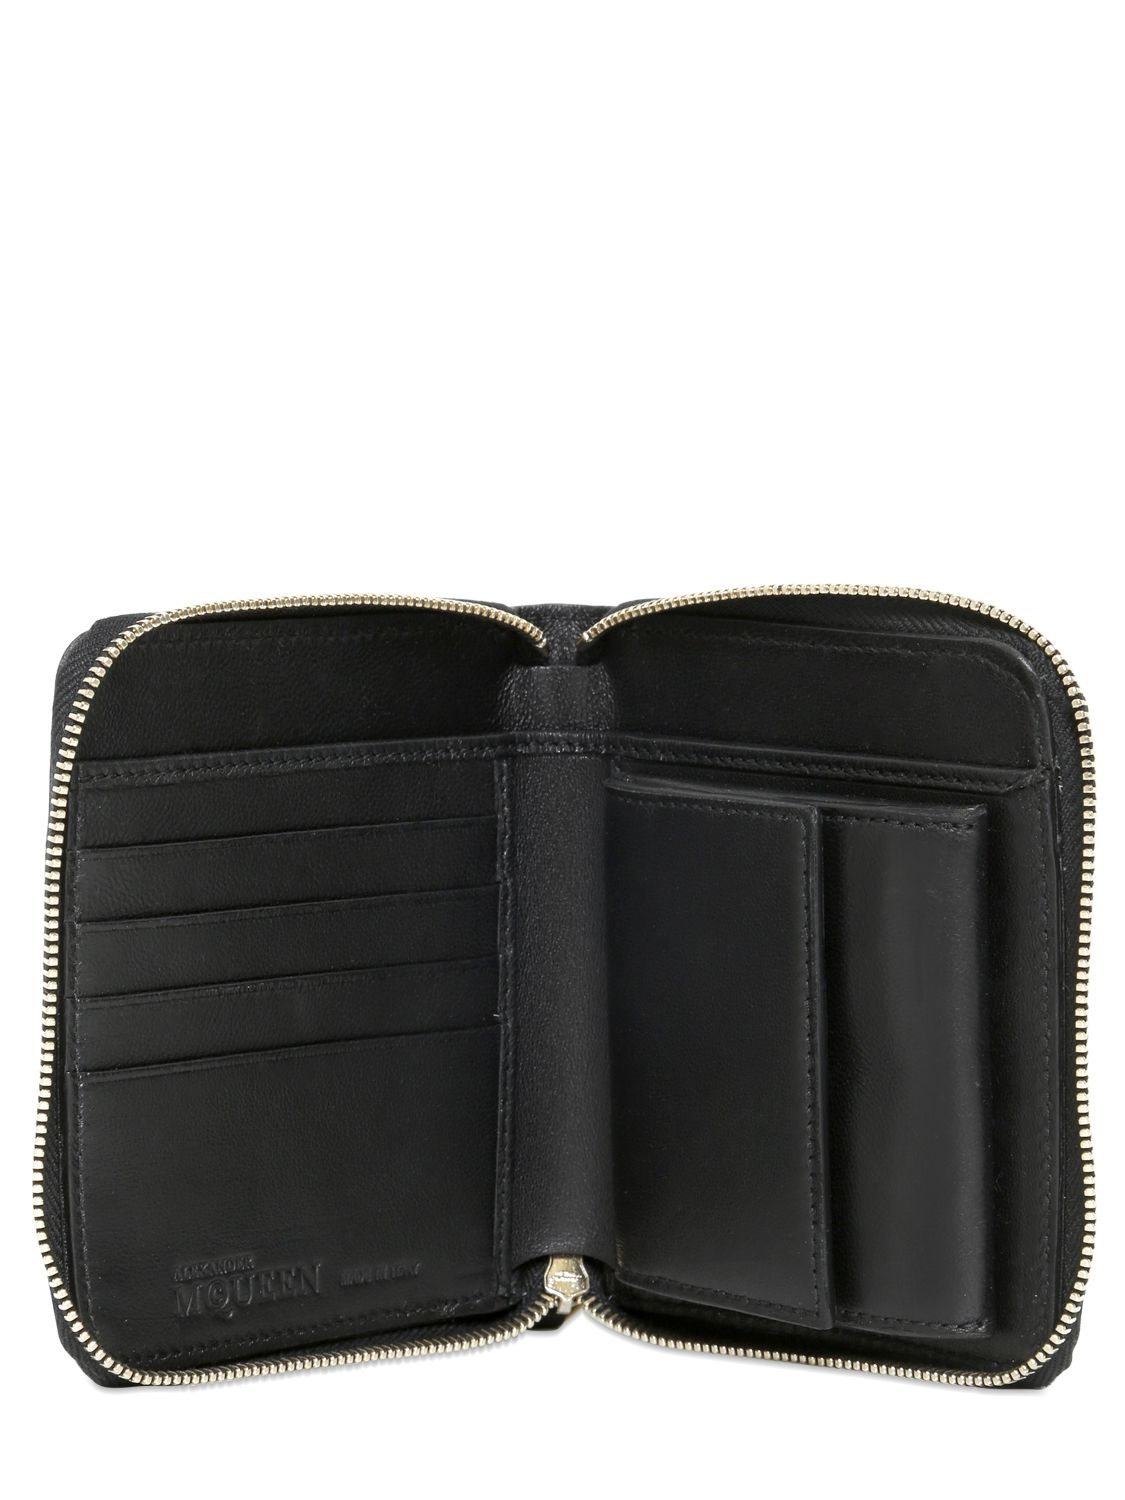 Alexander mcqueen Rib Cage Zip Leather Wallet in Black for Men | Lyst